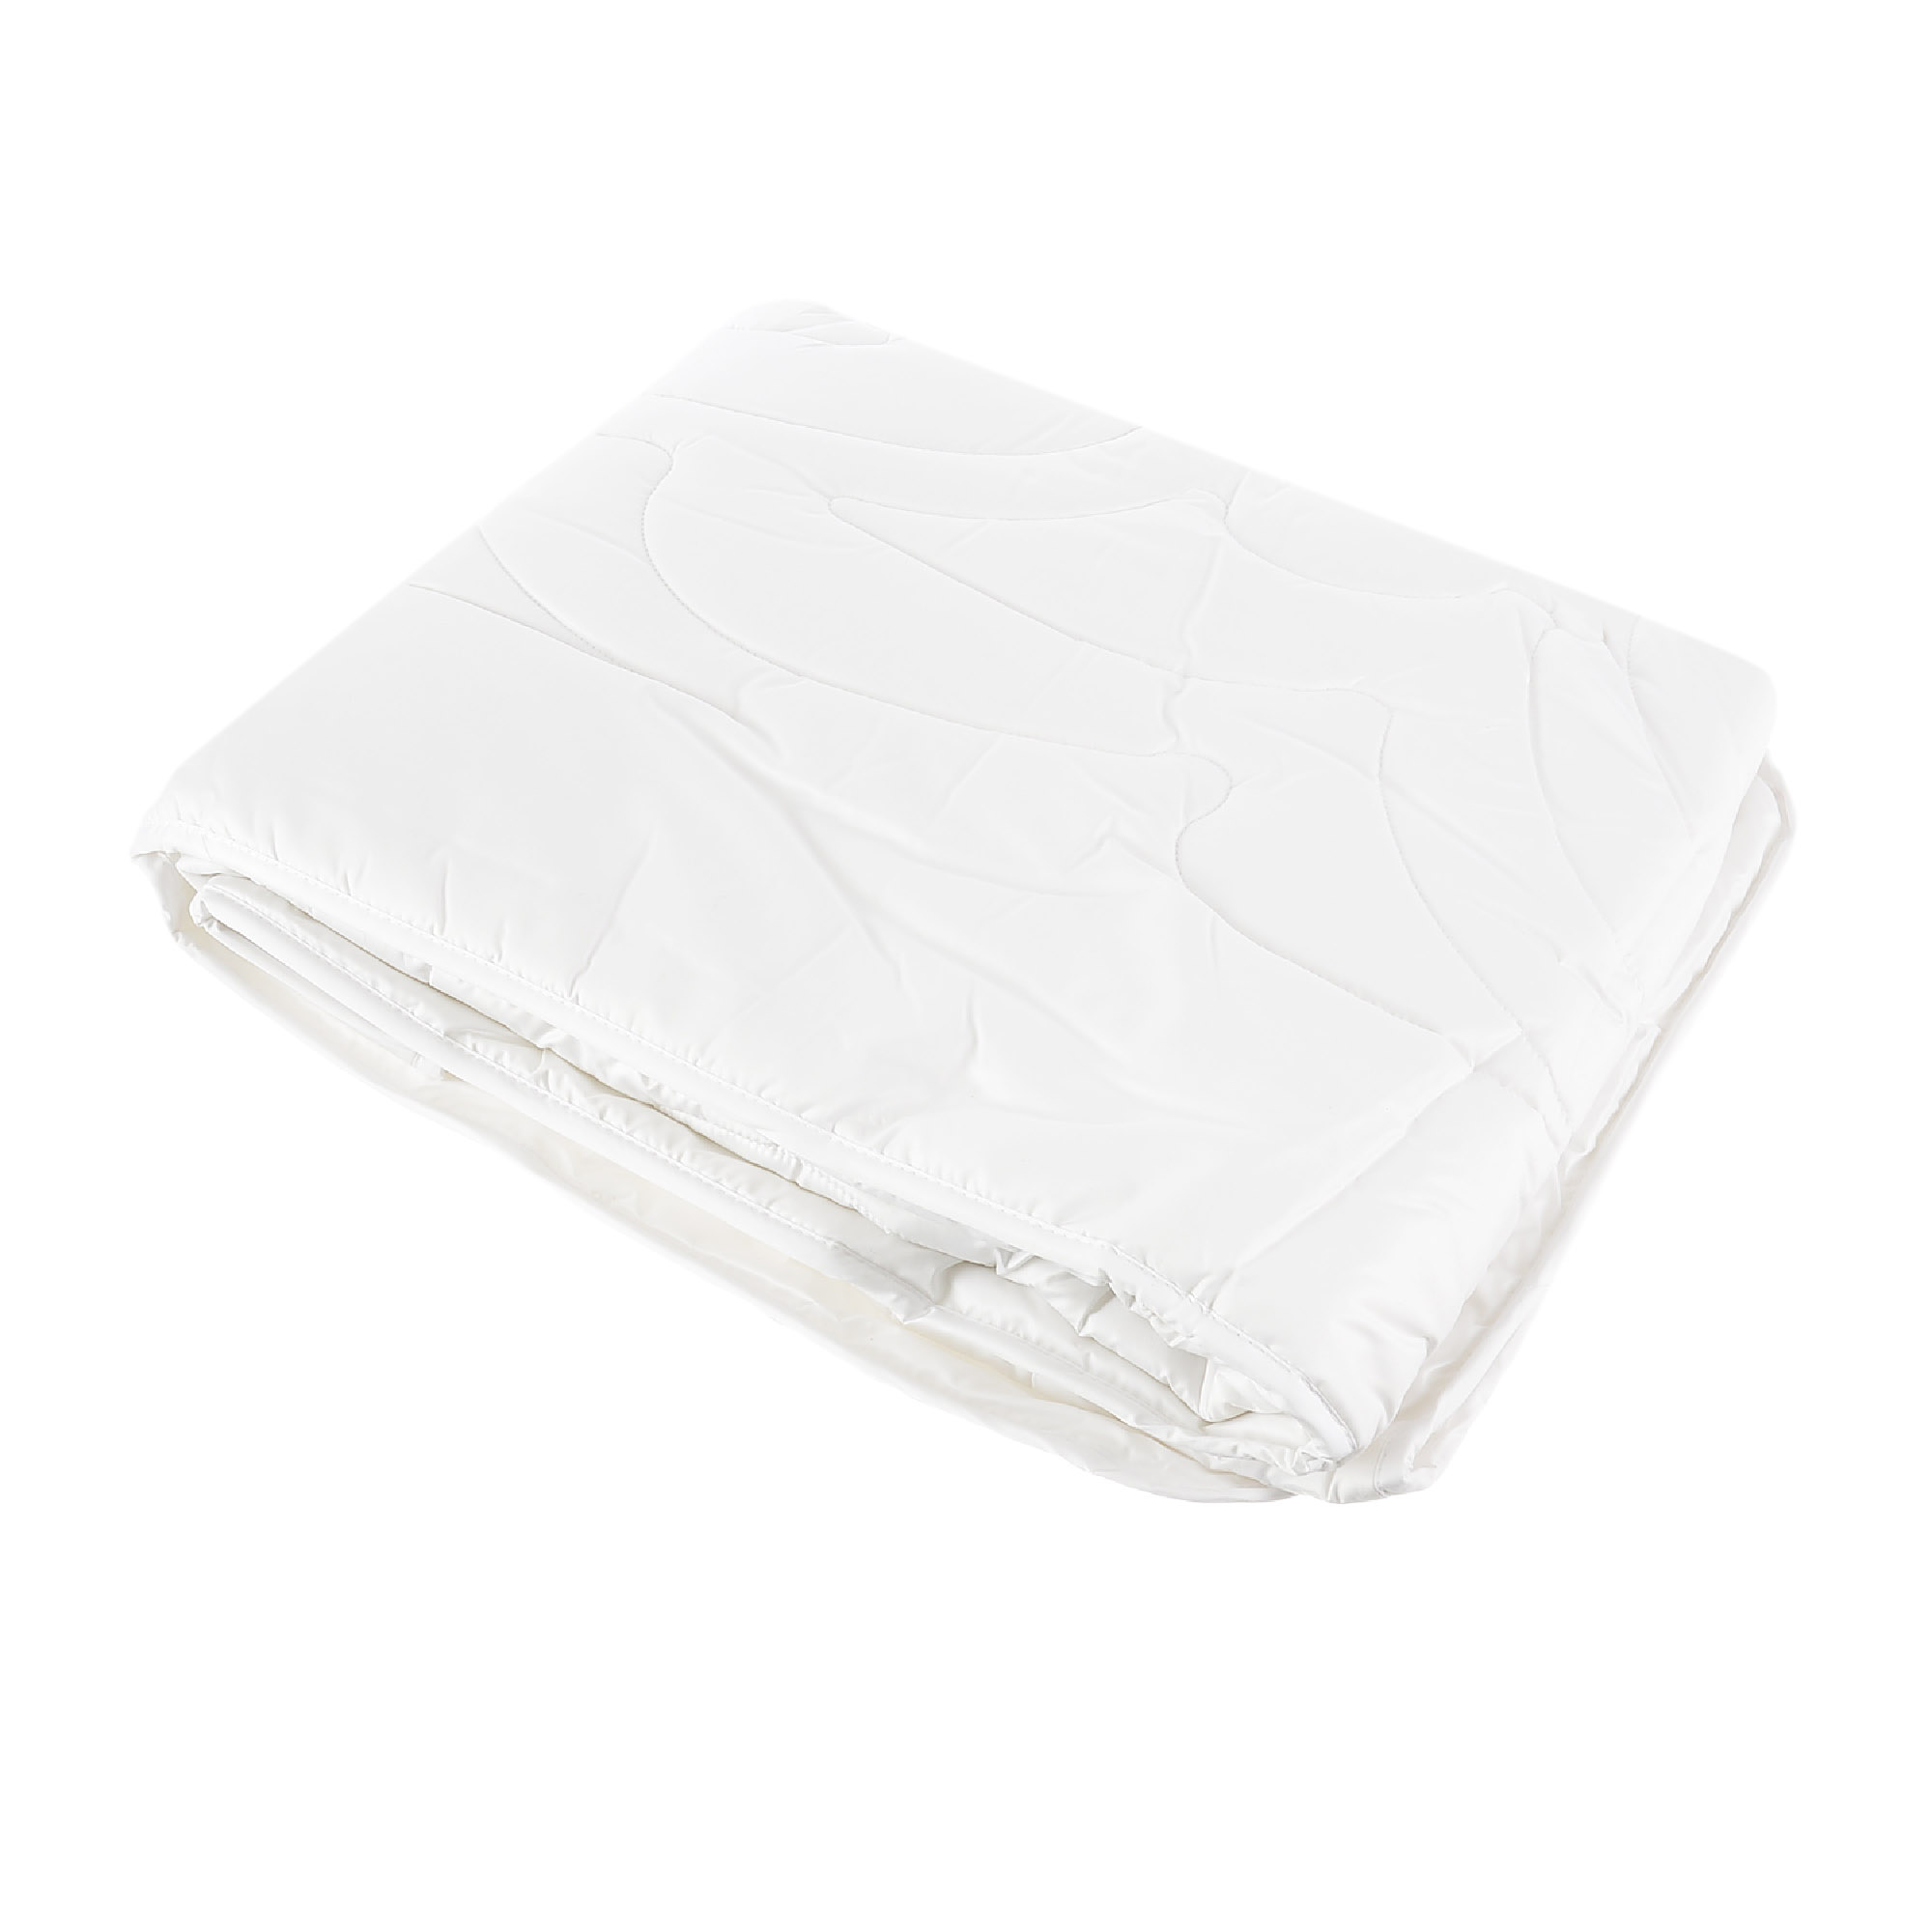 Одеяло Estia фальтерона среднее 140х200, размер 140х200 см - фото 5